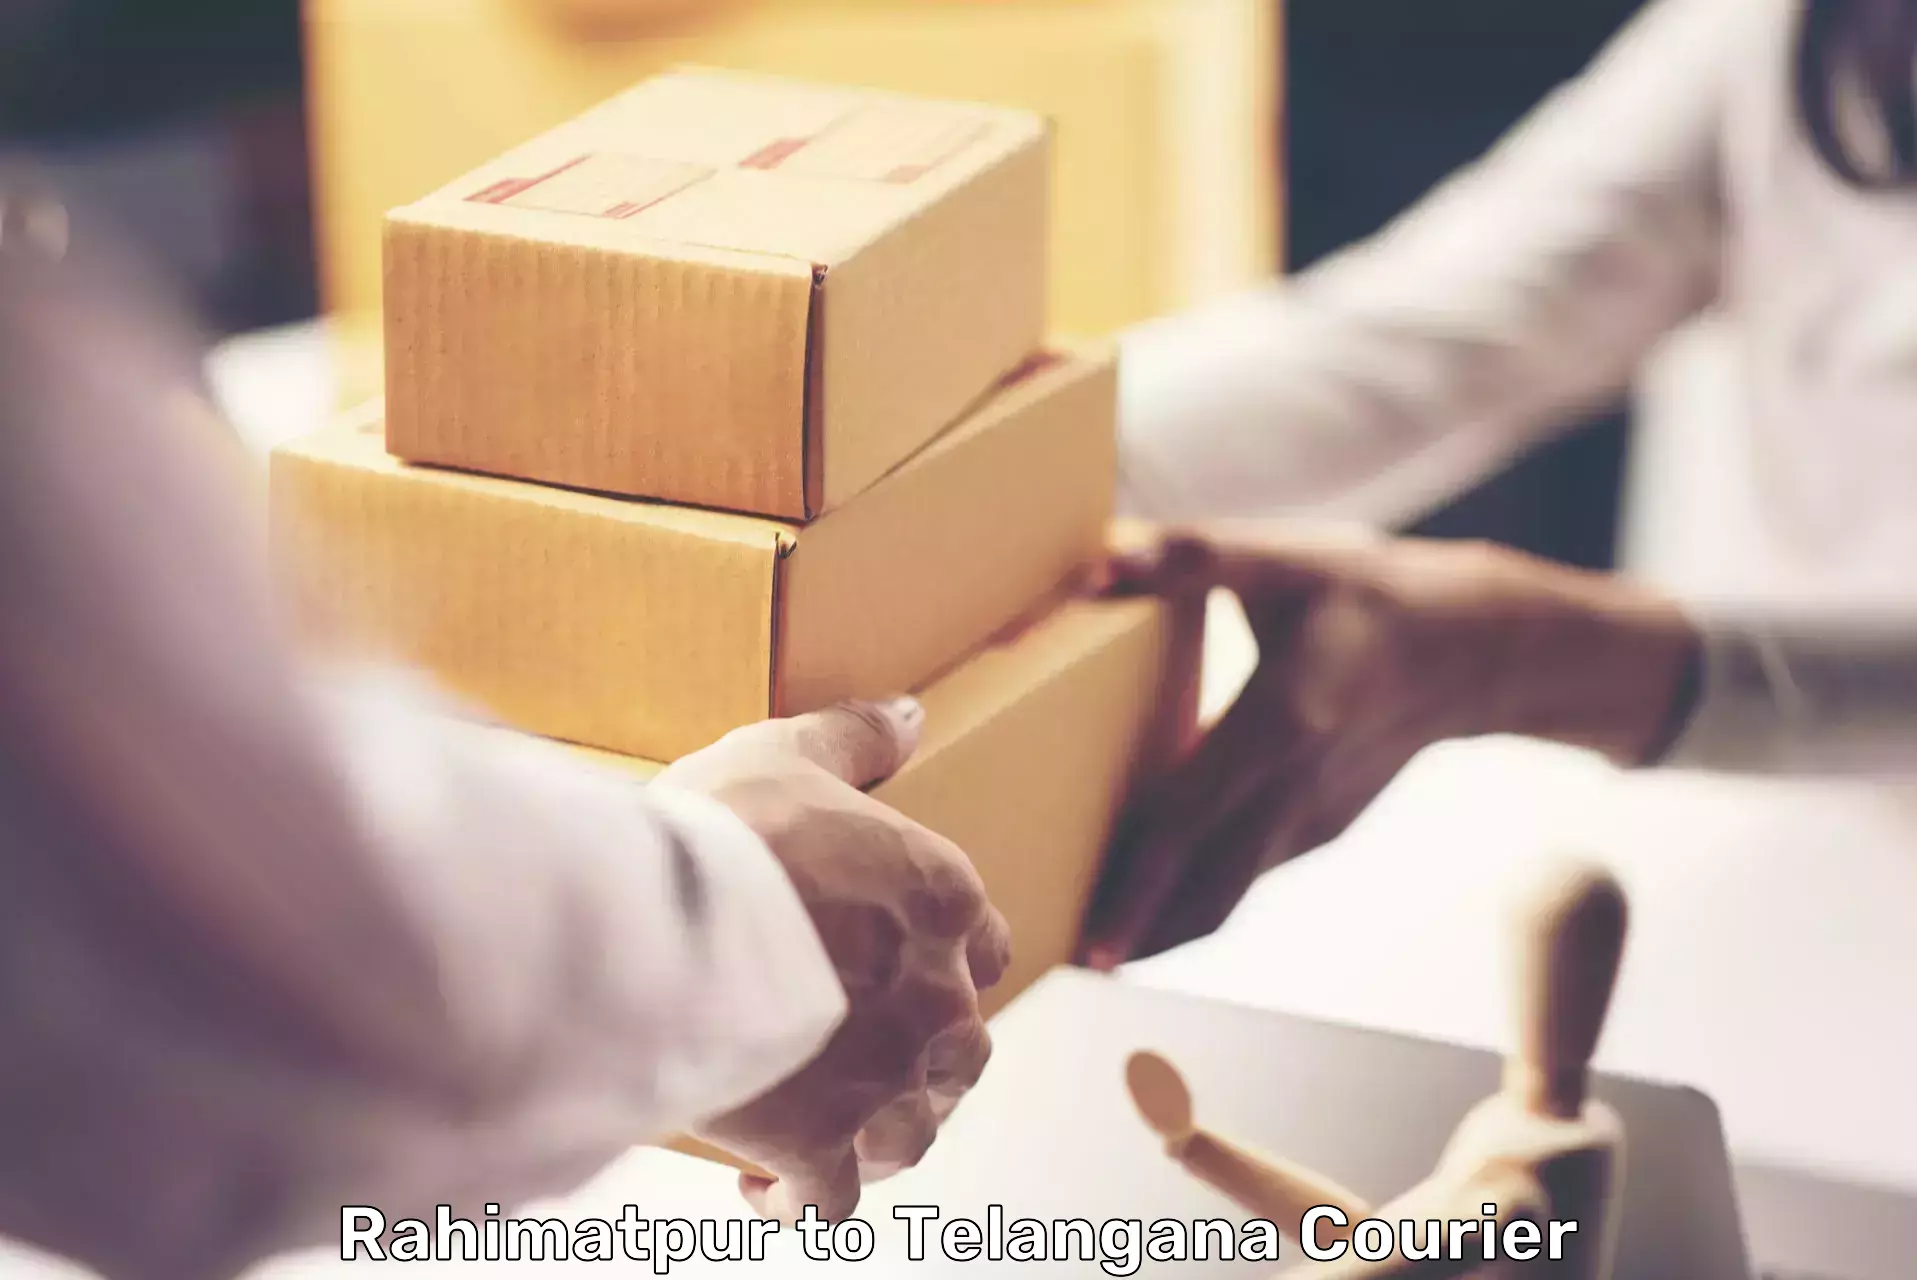 Regular parcel service Rahimatpur to Telangana